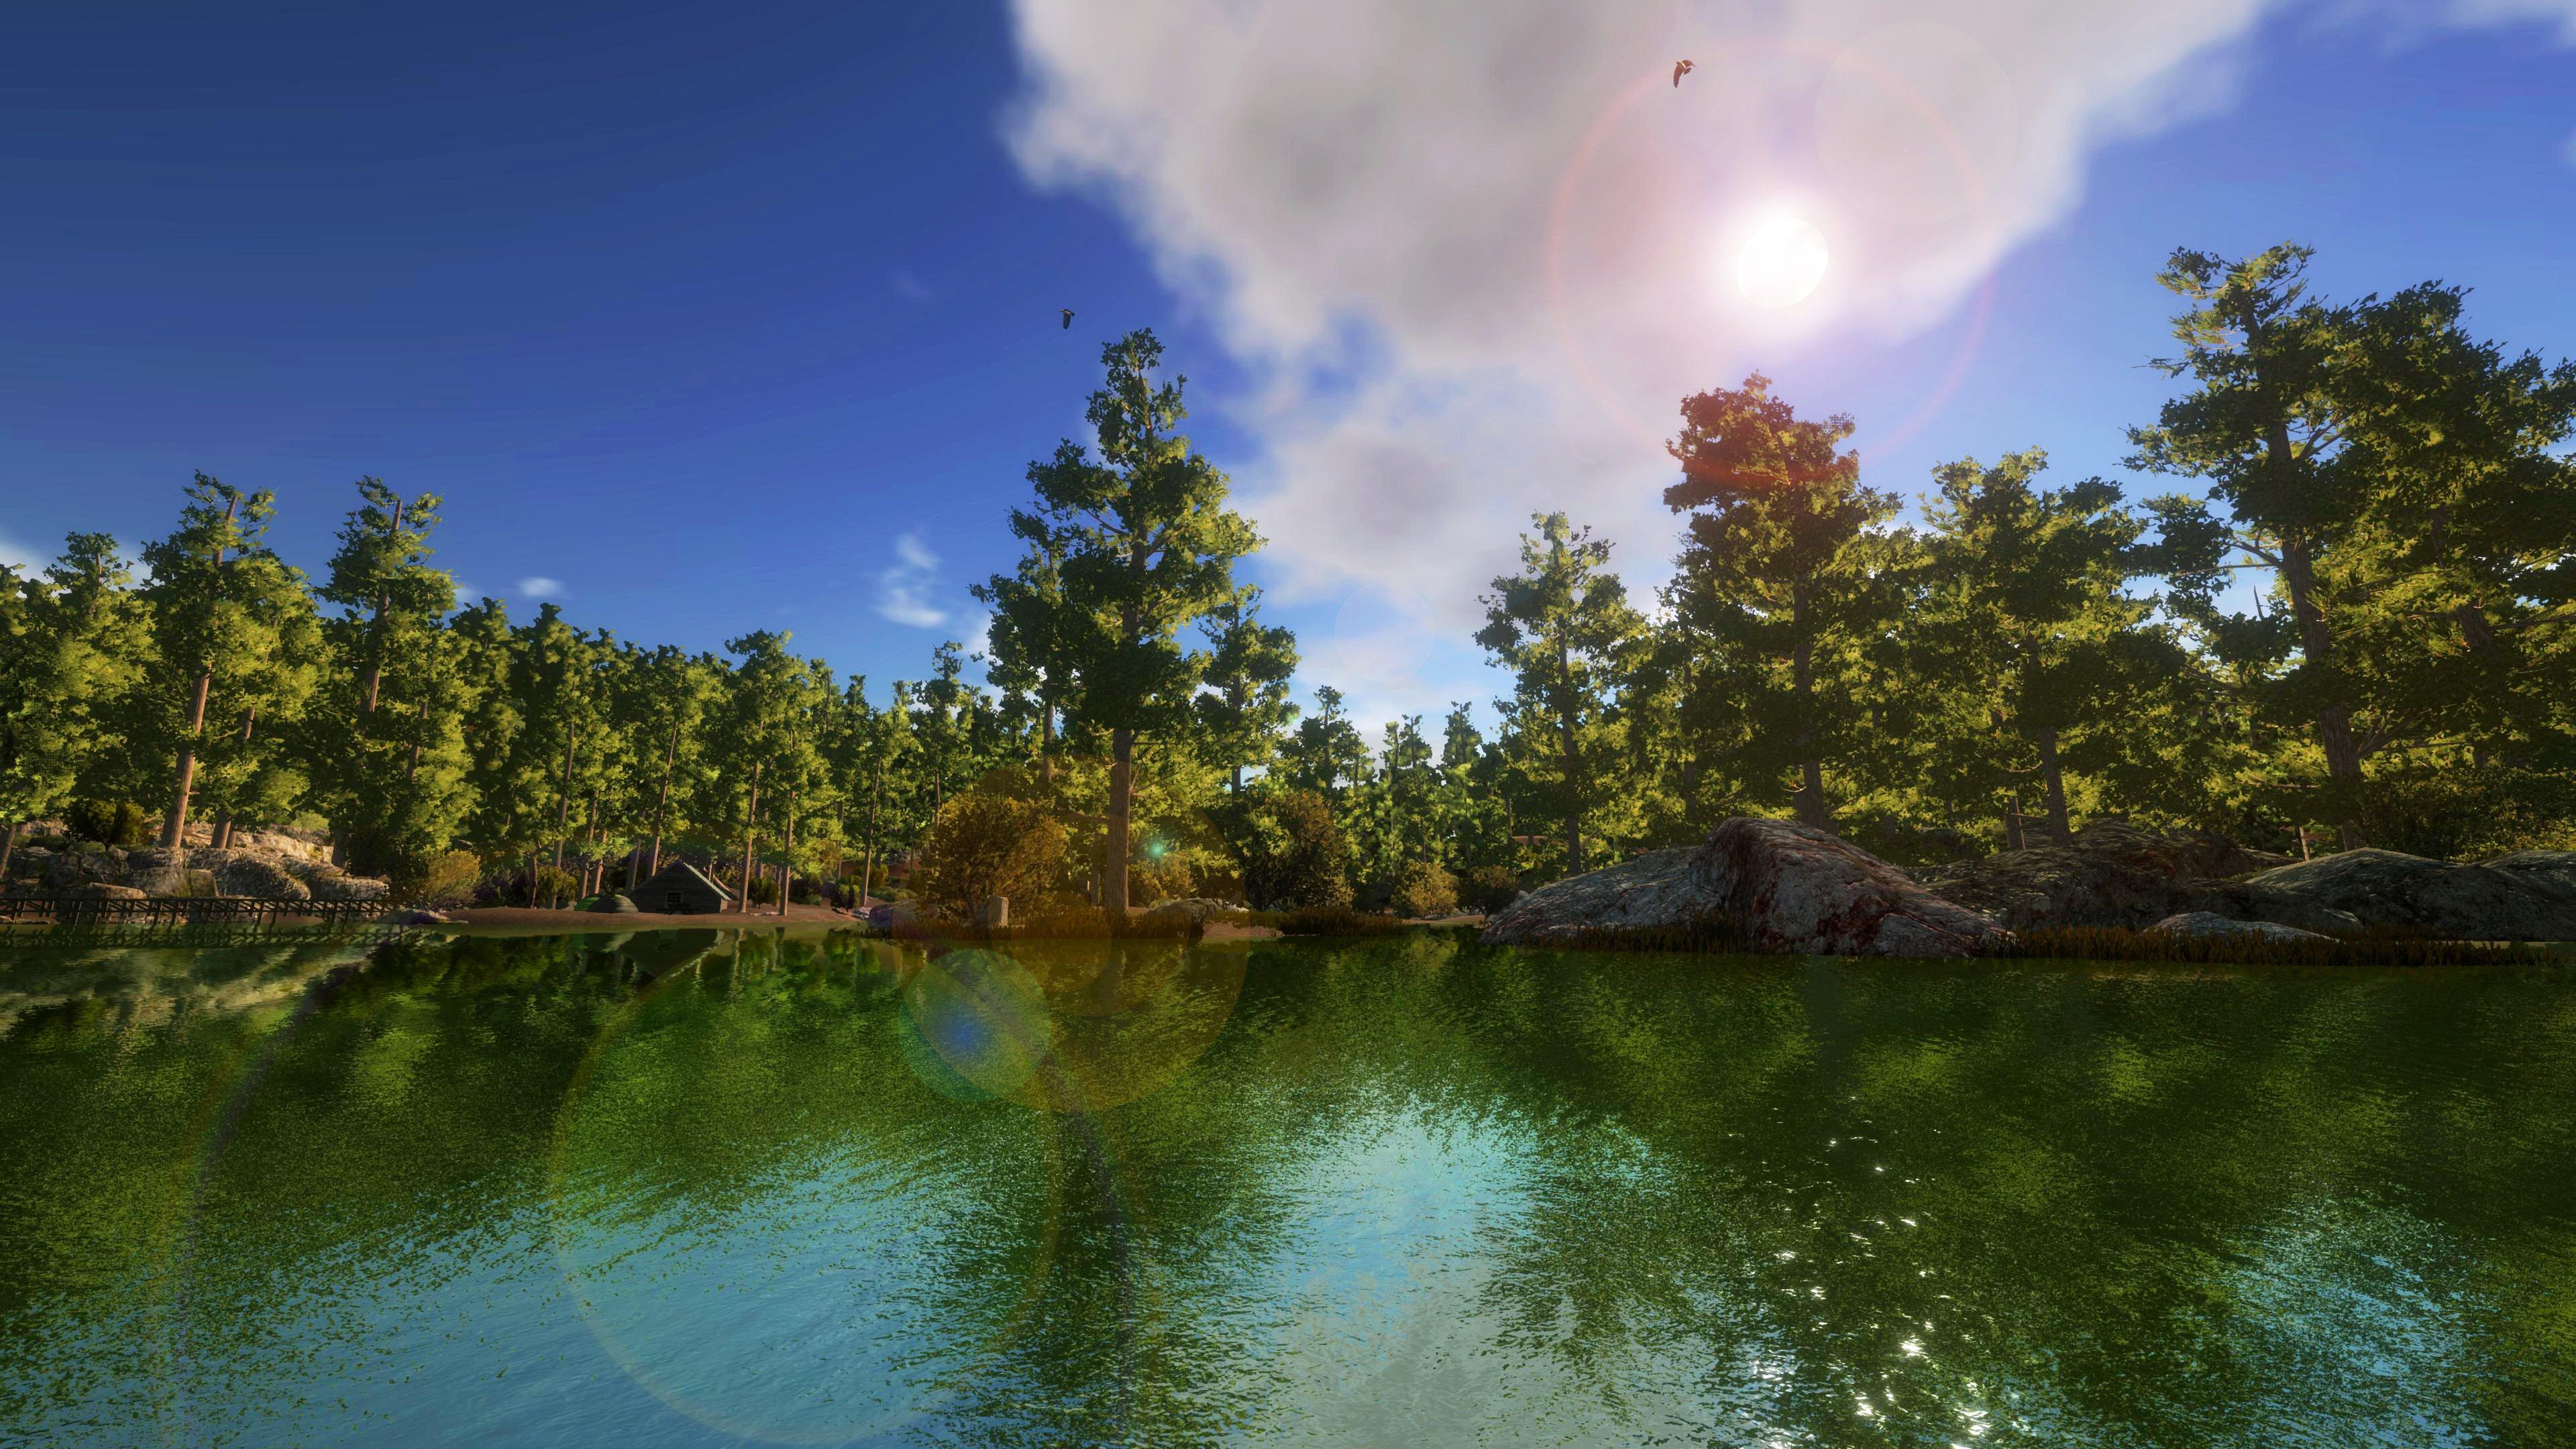  Pro Fishing Simulator Playstation 4 (PS4) : Video Games